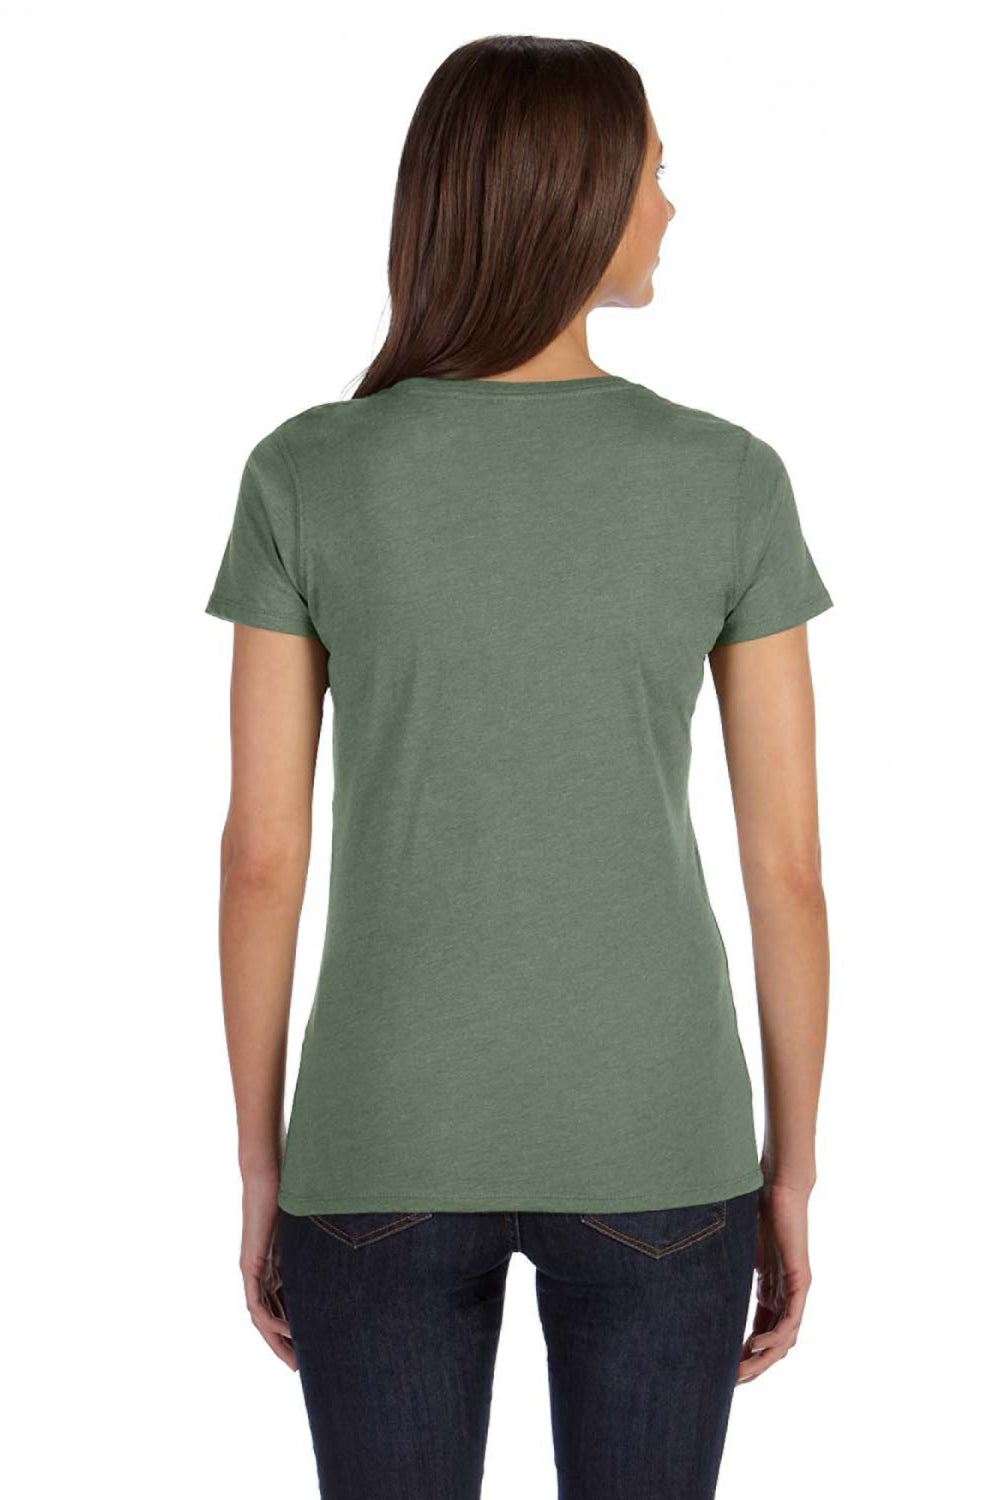 Econscious EC3800 Womens Short Sleeve Crewneck T-Shirt Asparagus Green Back